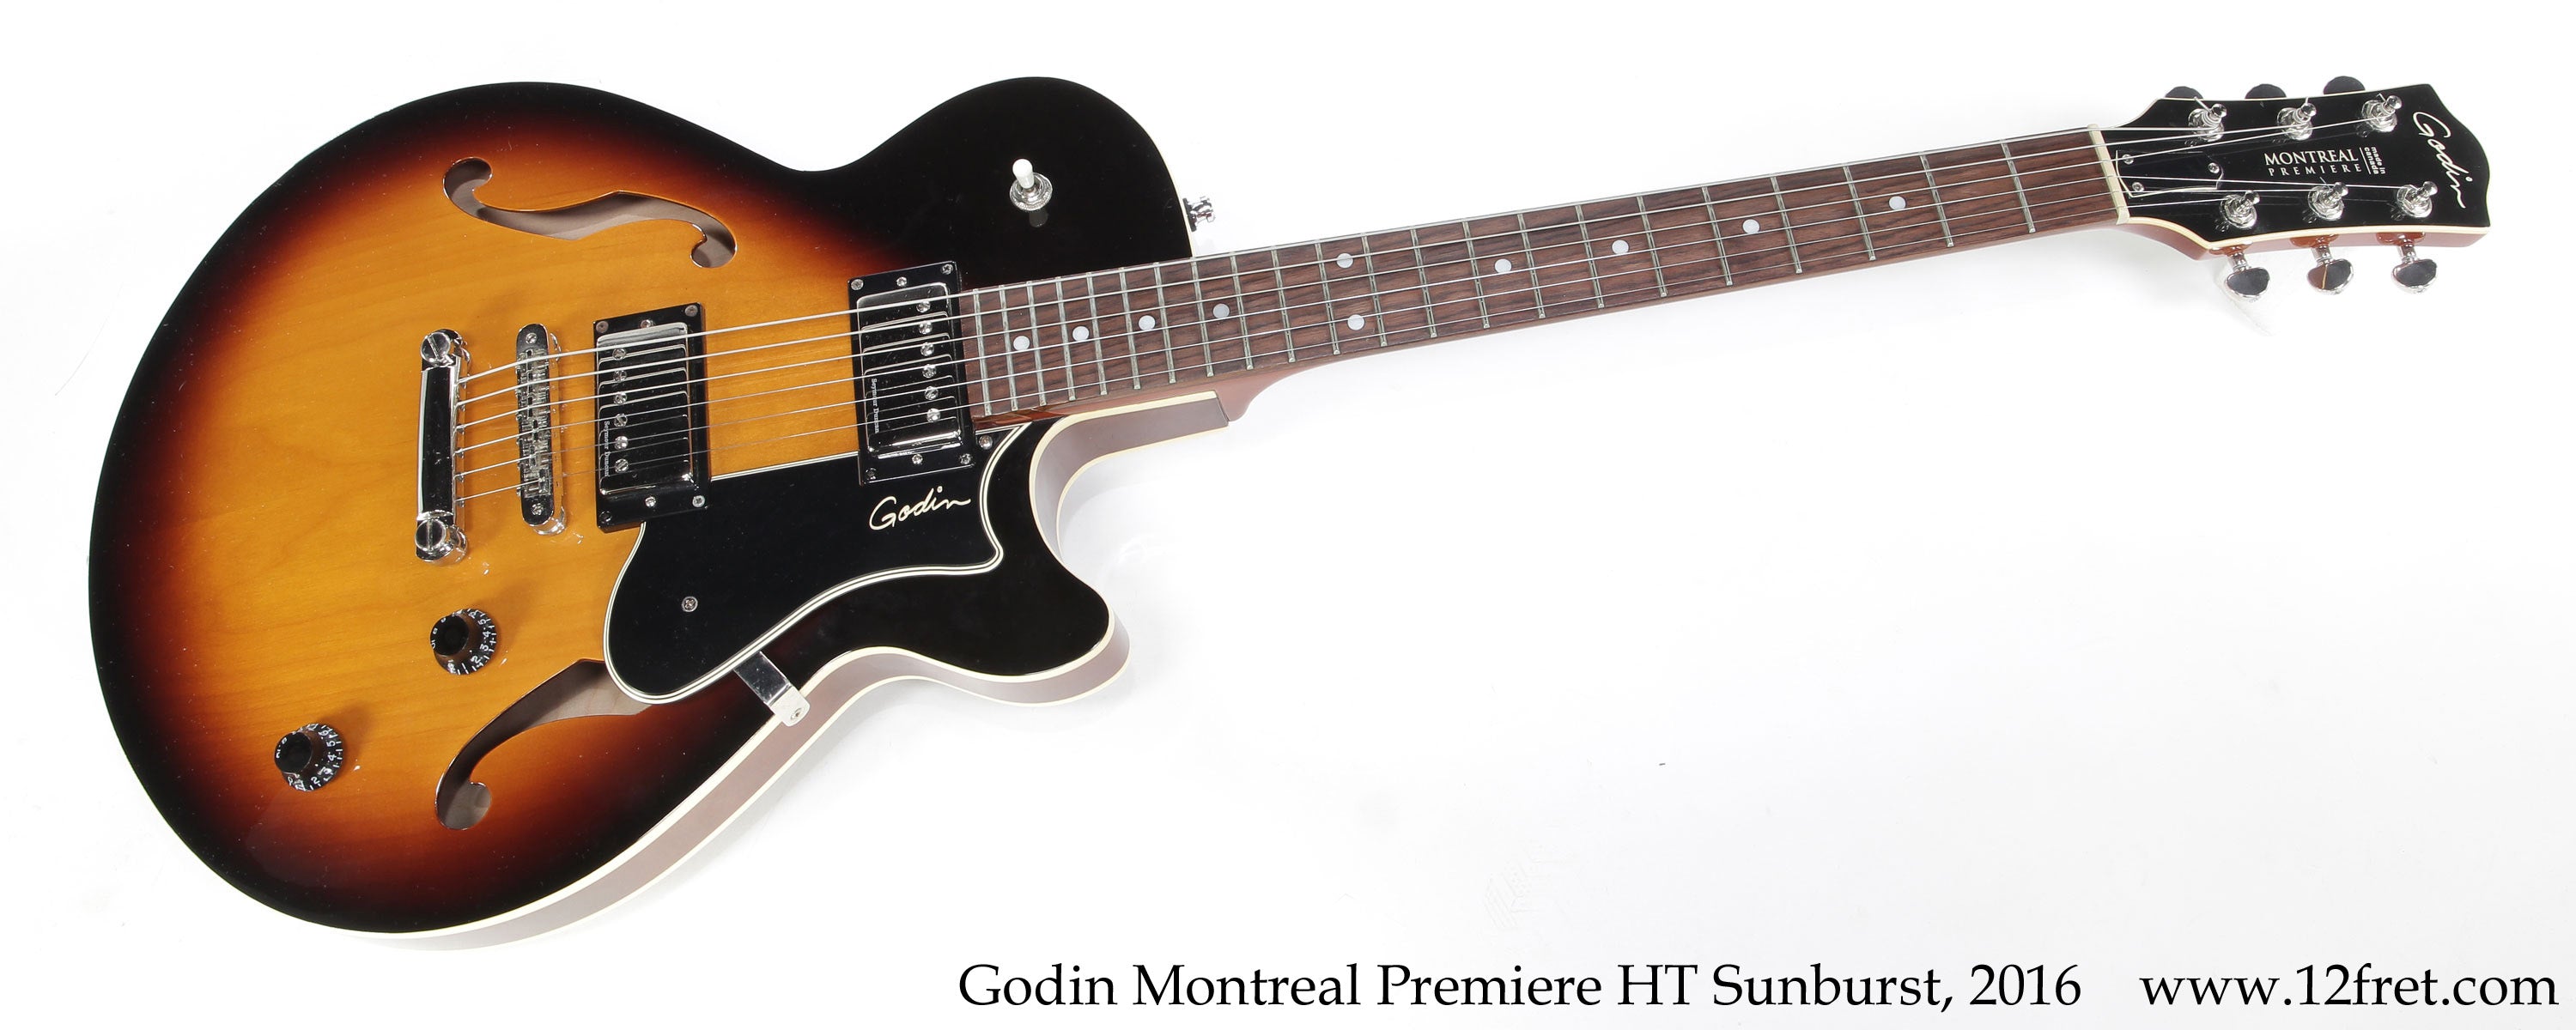 Godin Montreal Premiere HT Sunburst, 2016 - The Twelfth Fret